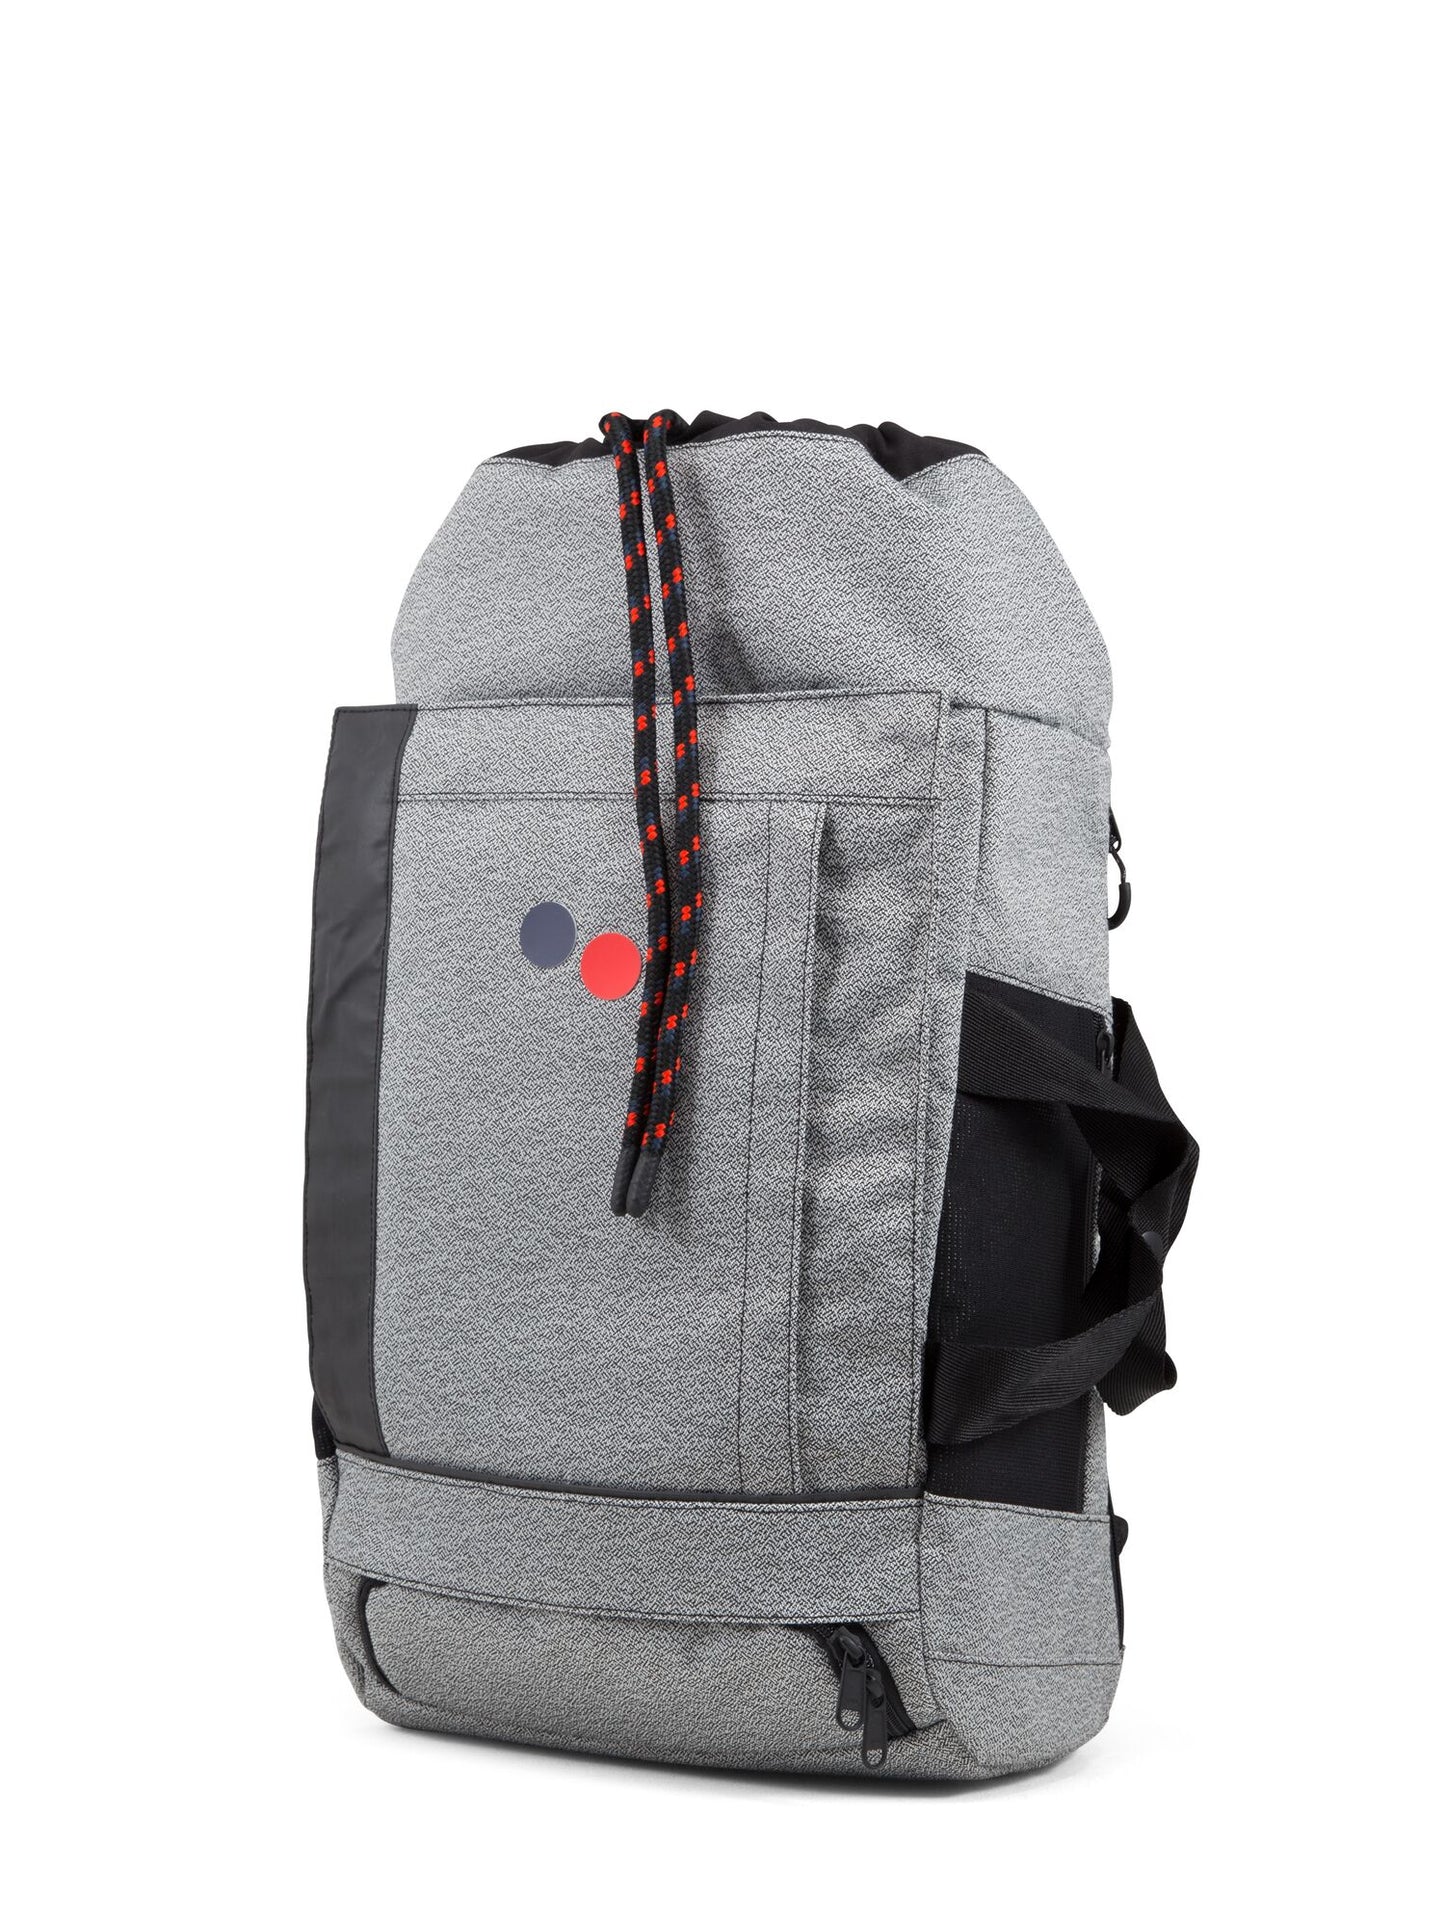 pinqponq-backpack-Blok-Medium-Vivid-Monochrome-front